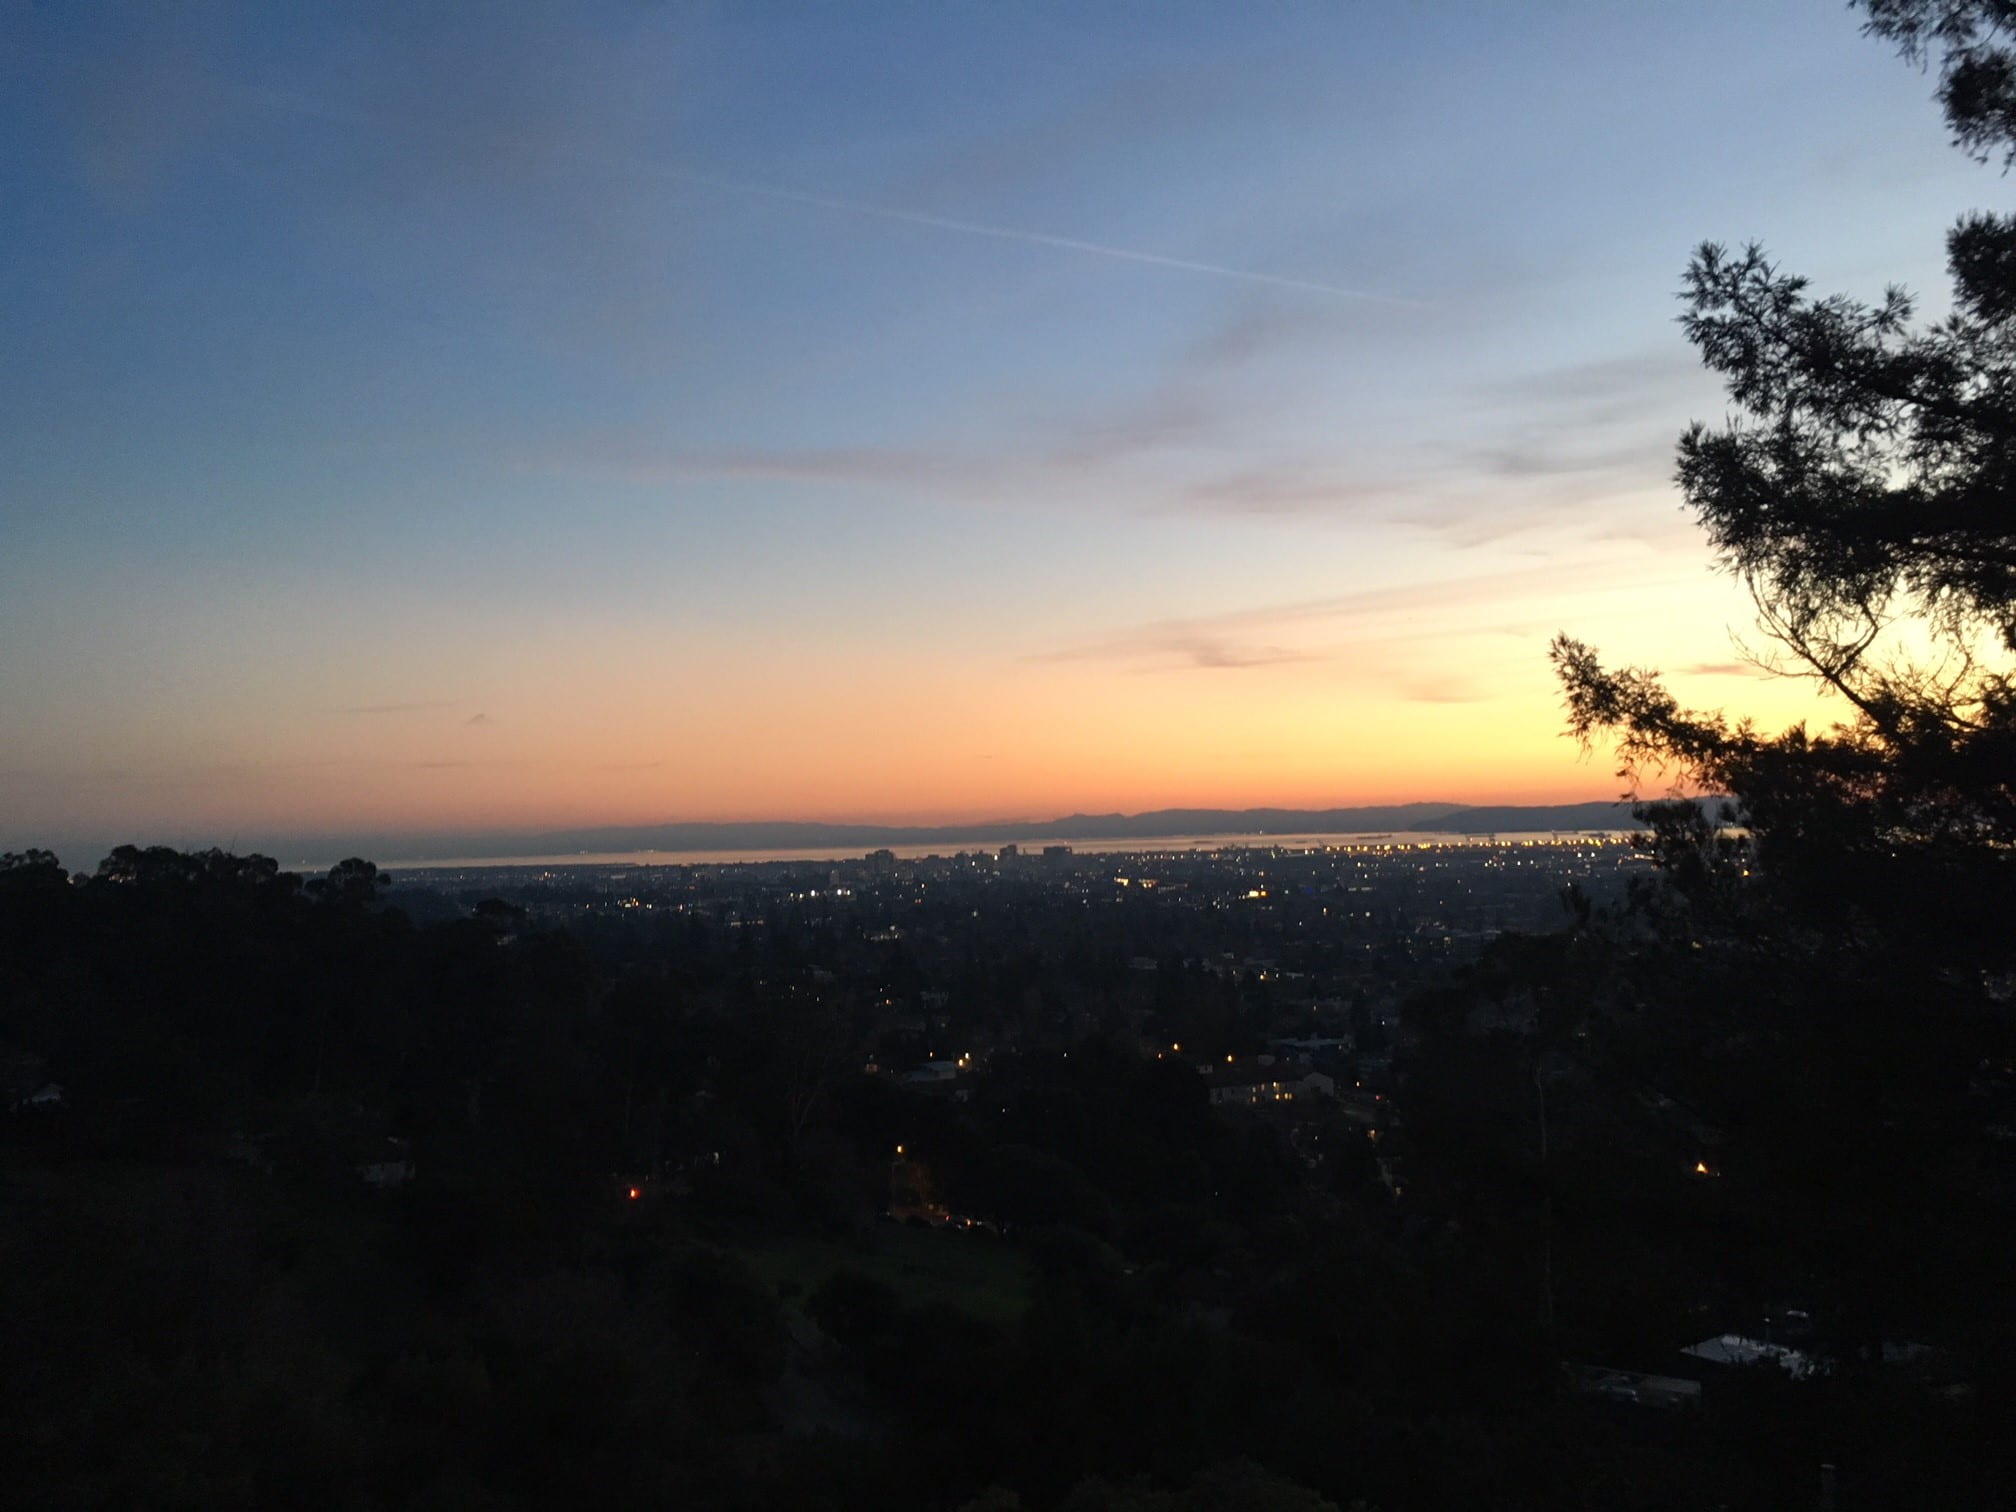 Sunset over Berkeley